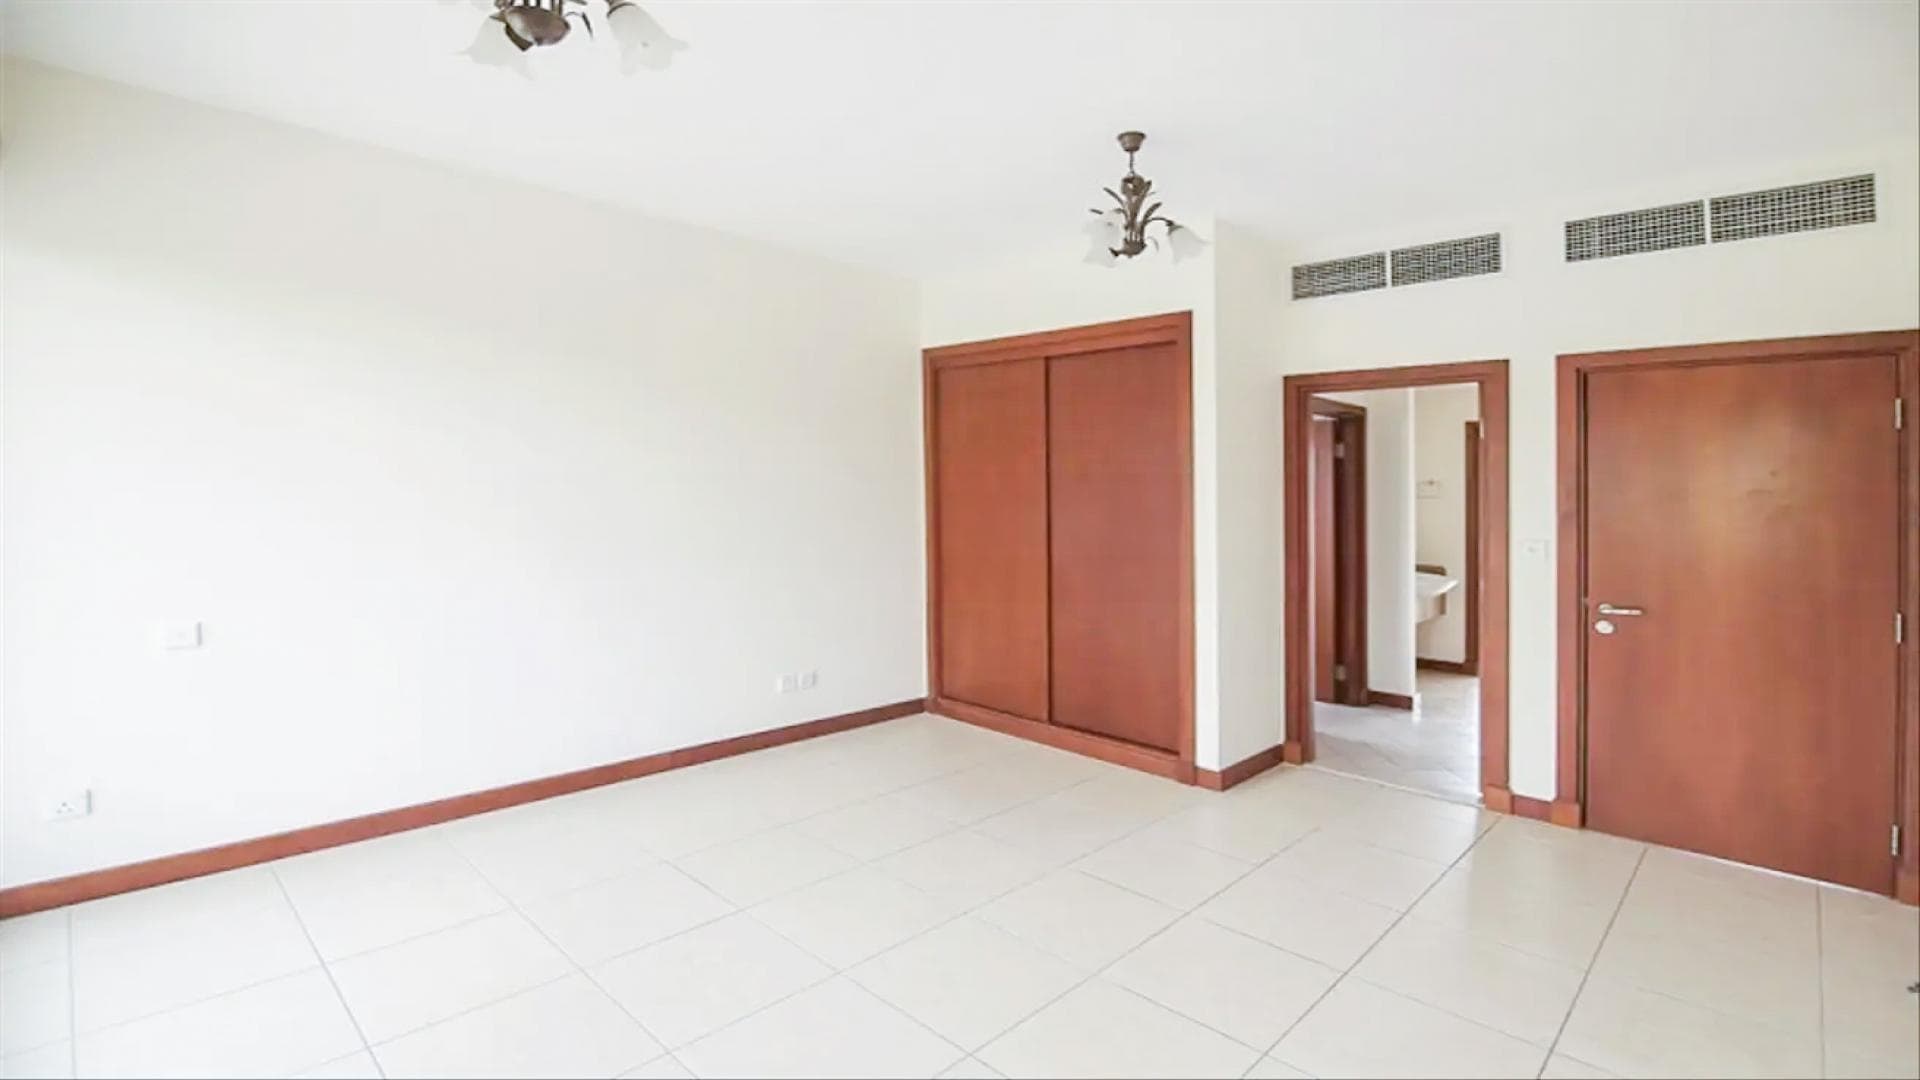 3 Bedroom Villa For Rent Al Seef Tower 3 Lp37184 2618e5ed2cbcd200.jpg